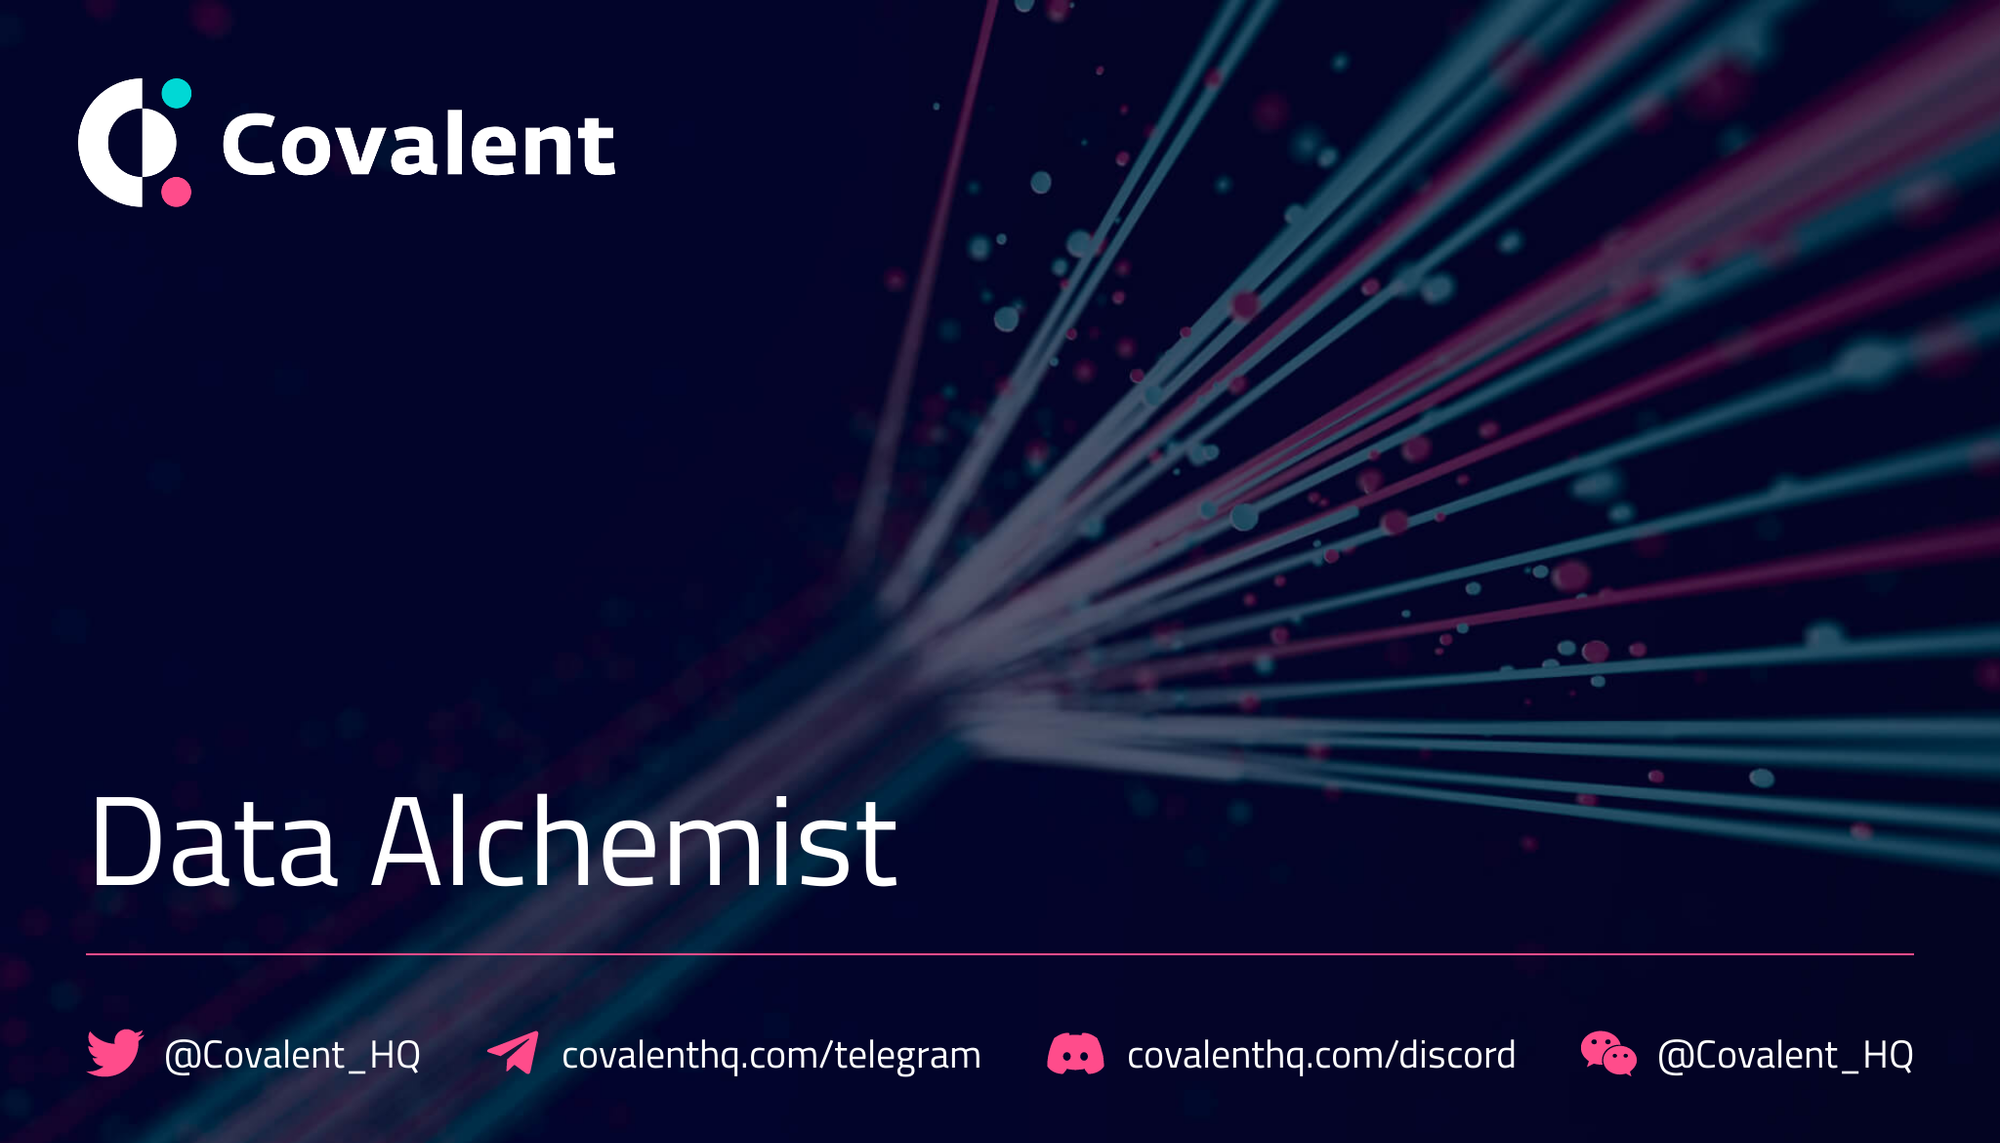 Data Alchemist - Covalent